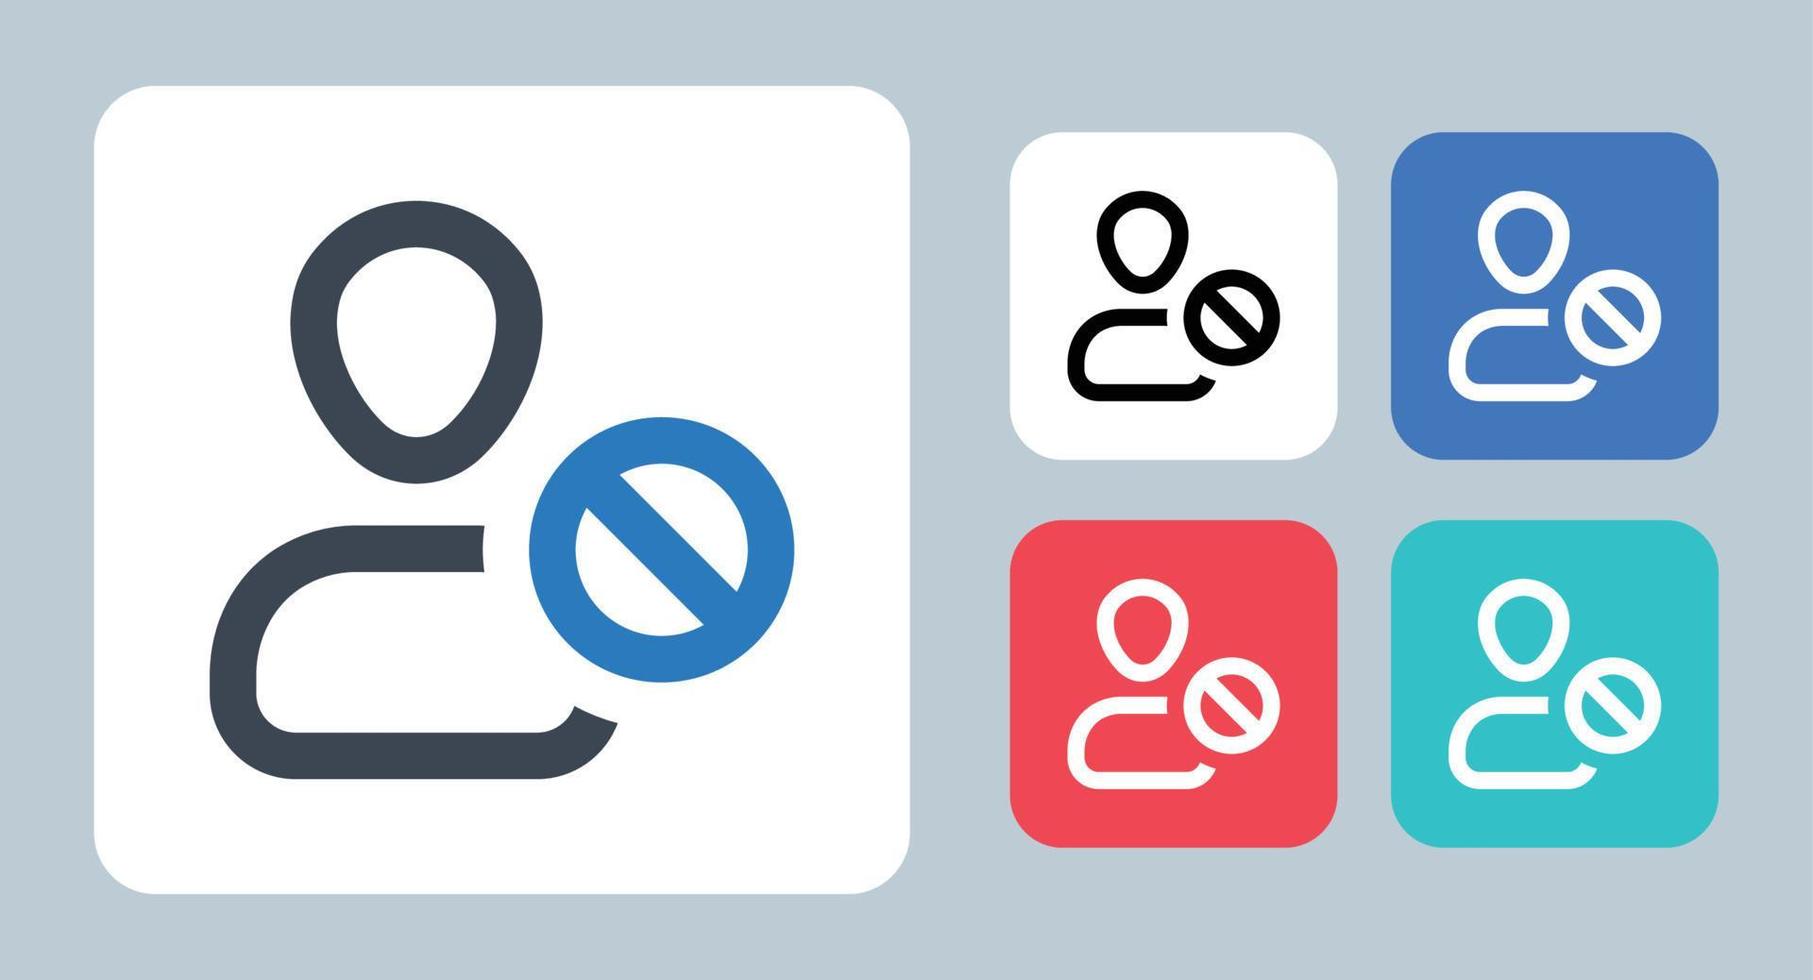 Block Account icon - vector illustration . Block, Account, User, Profile, Cancel, Avatar, Friend, Forbidden, person, line, outline, flat, icons .